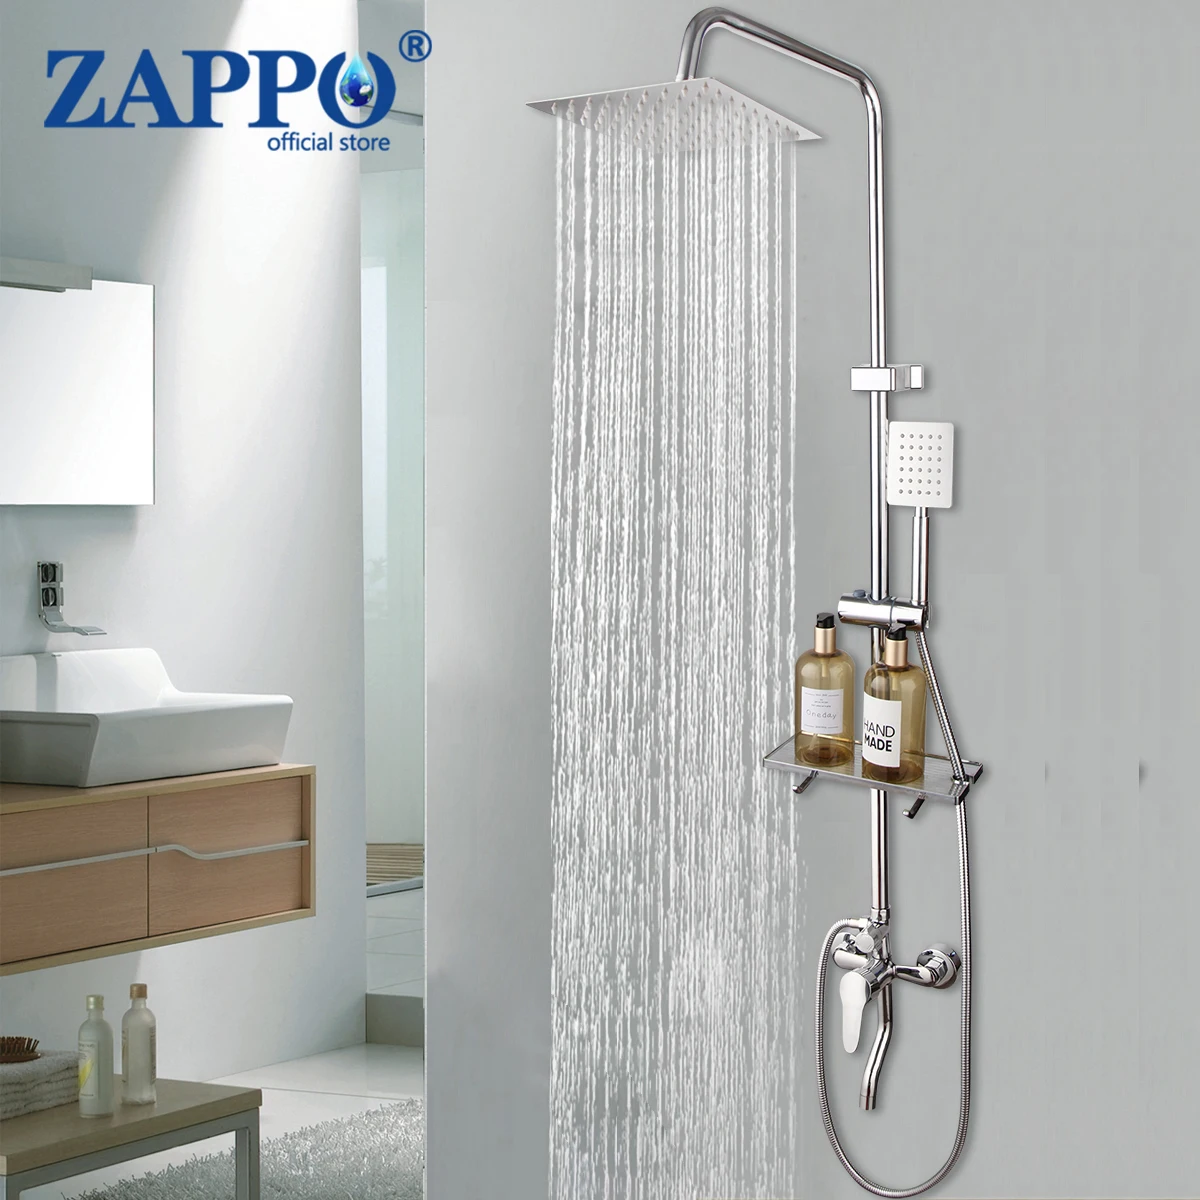 Zappo Wall Mount Ultrlthin Shower Head Chrome Polish Rainfall  Bathtub Mixer Faucet Bathroom Adjust Height  Shower Faucet Set